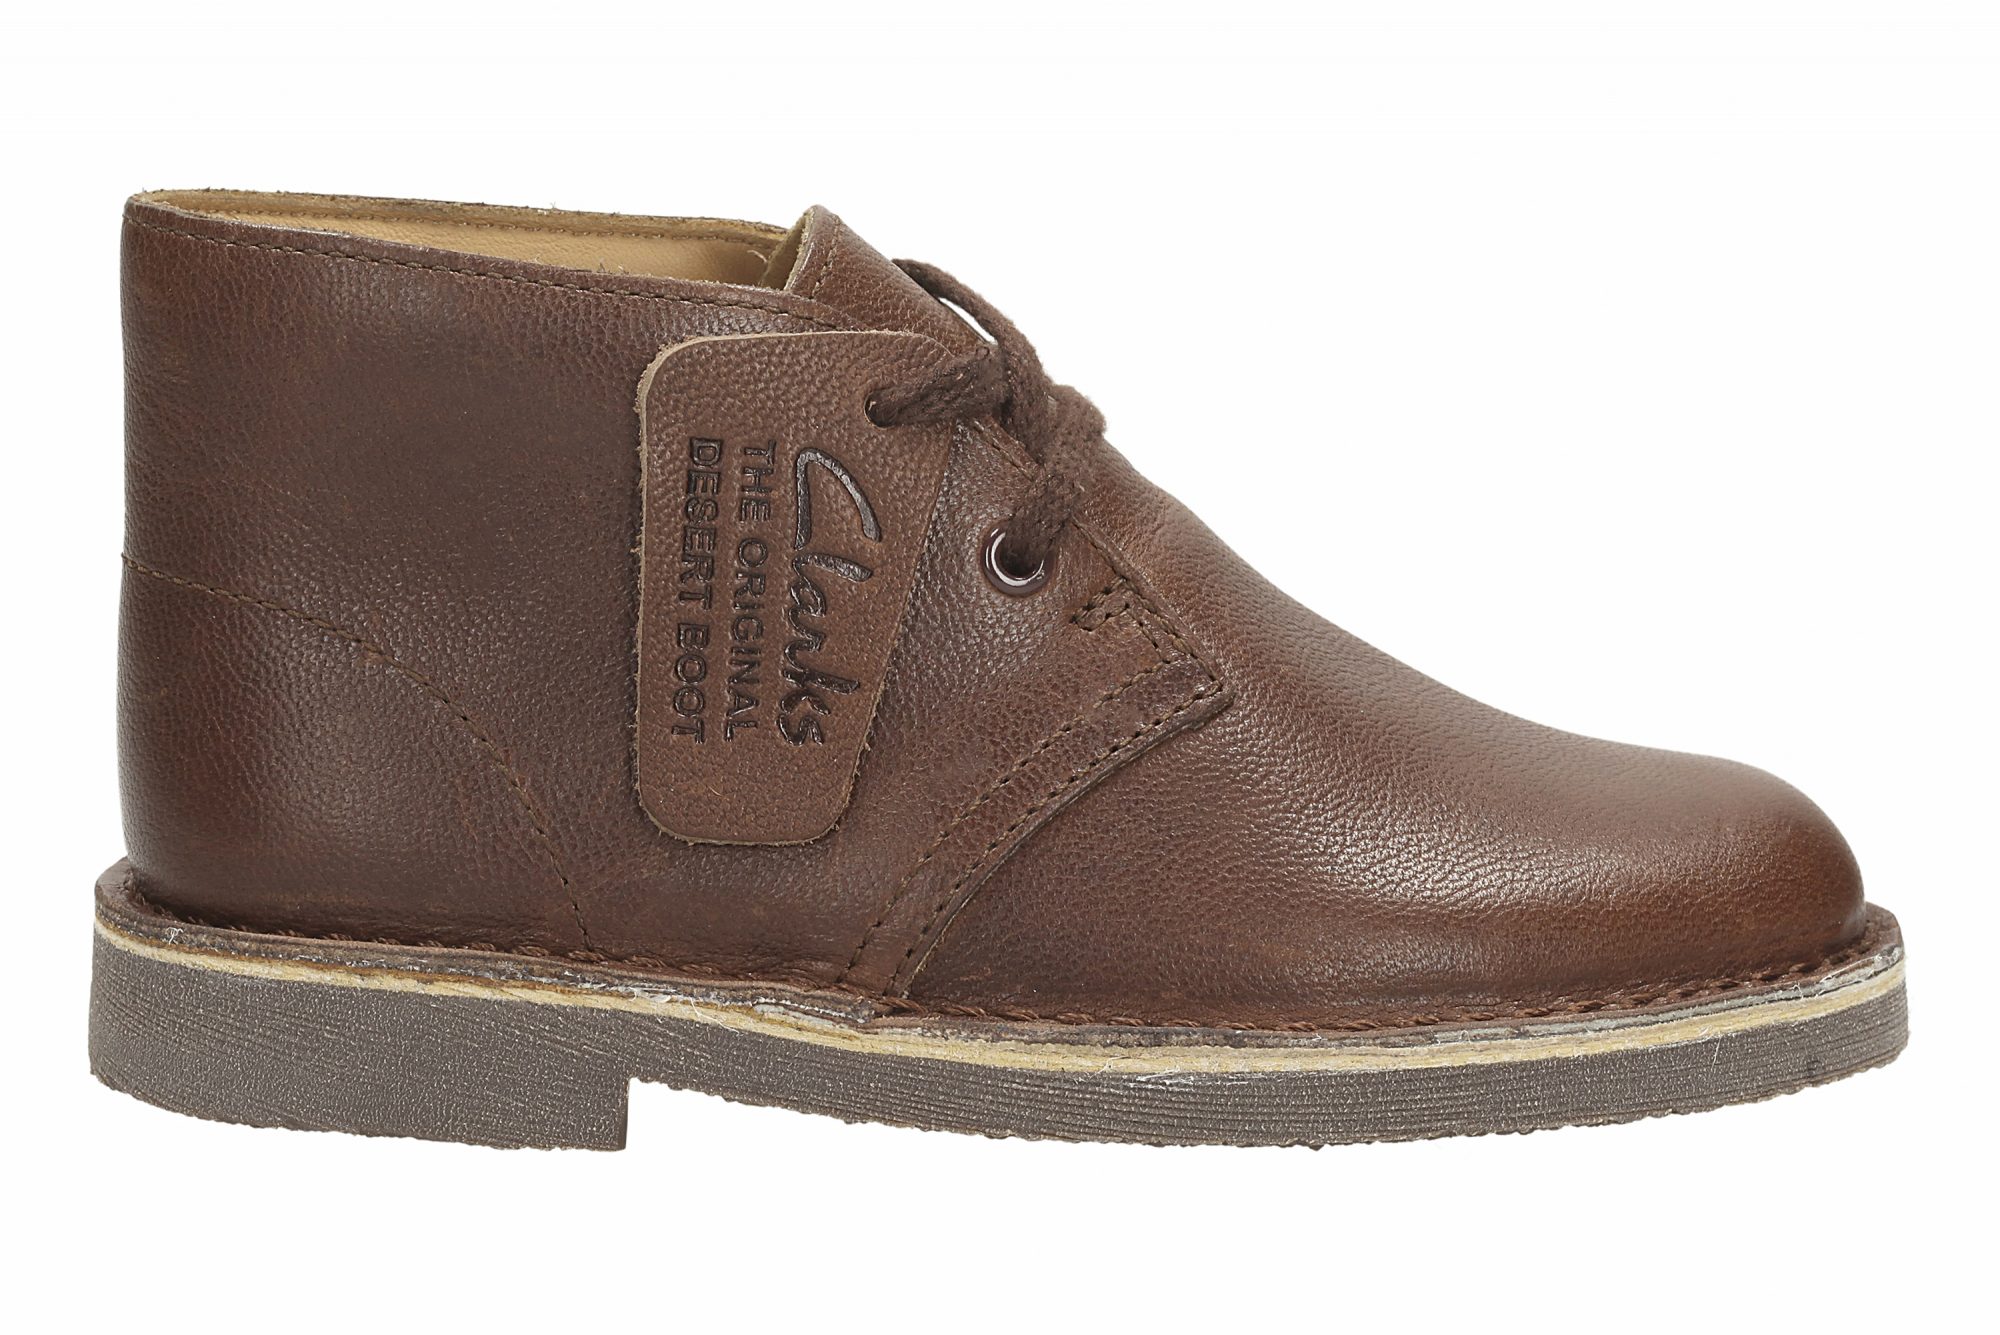 Clarks Desert Boot Boy Chestnut 26103716 - Boys Boots - Humphries Shoes